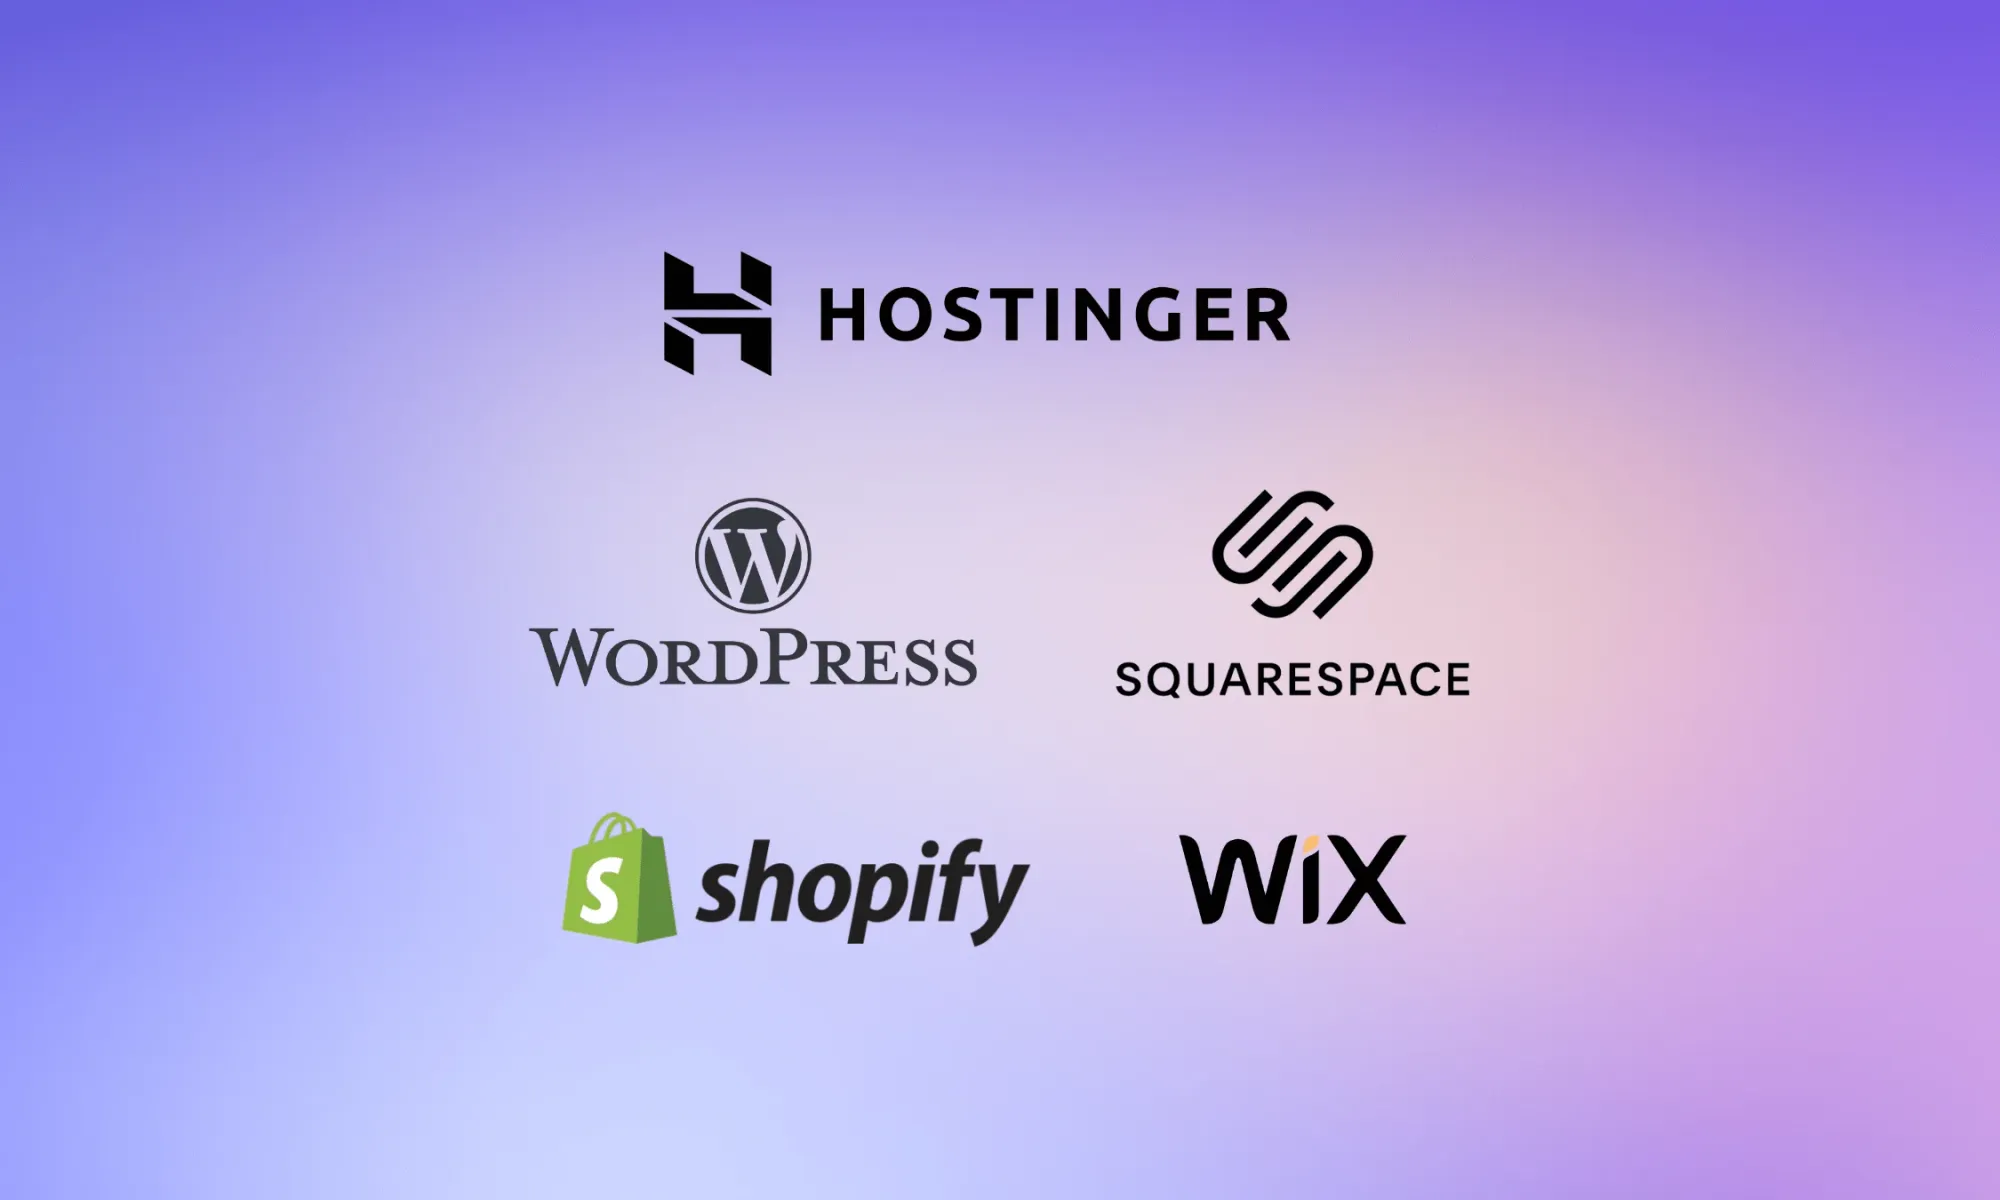 Website builder logos compared